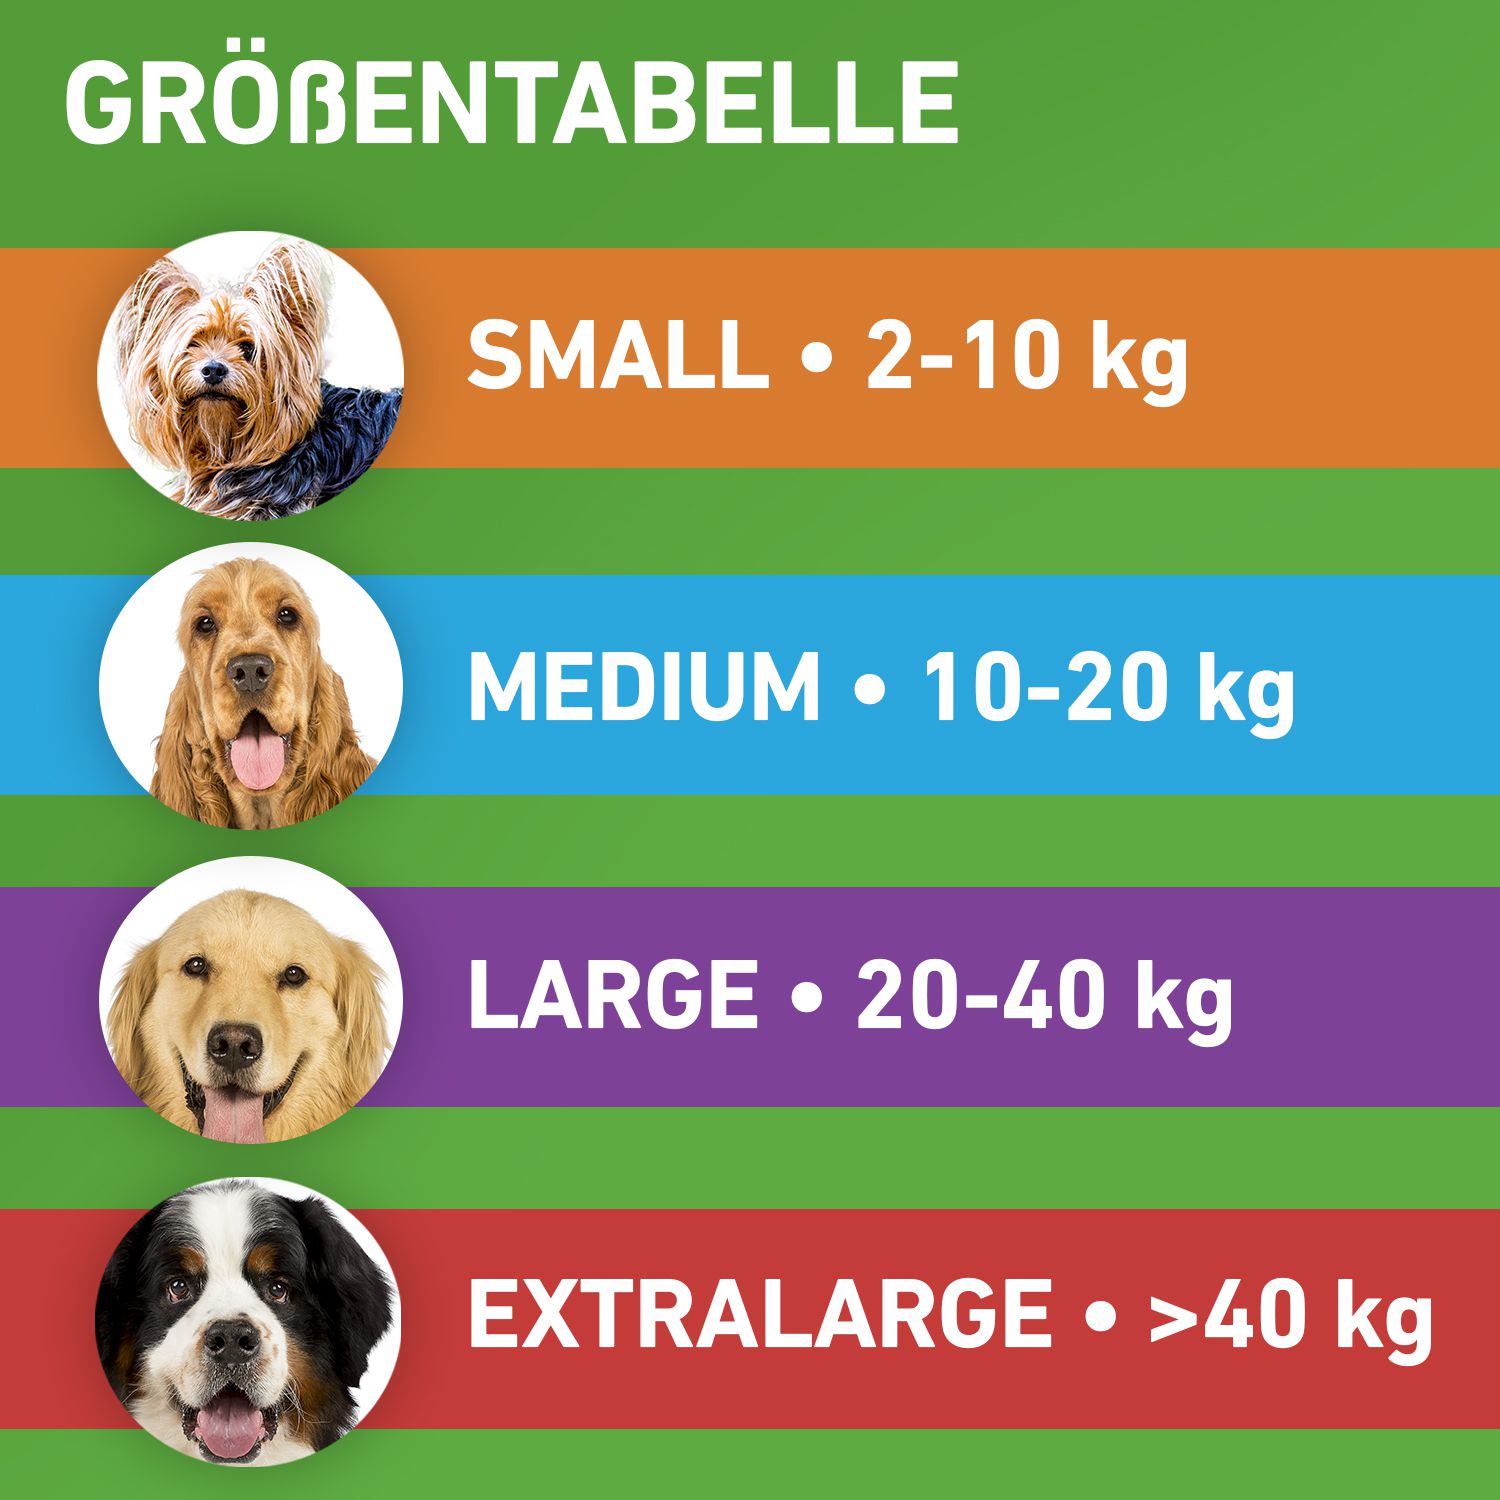 FRONTLINE COMBO® gegen Zecken, Flöhe (Flöhe, Eier, Larven, Puppen) bei Hunden S (5-10Kg)